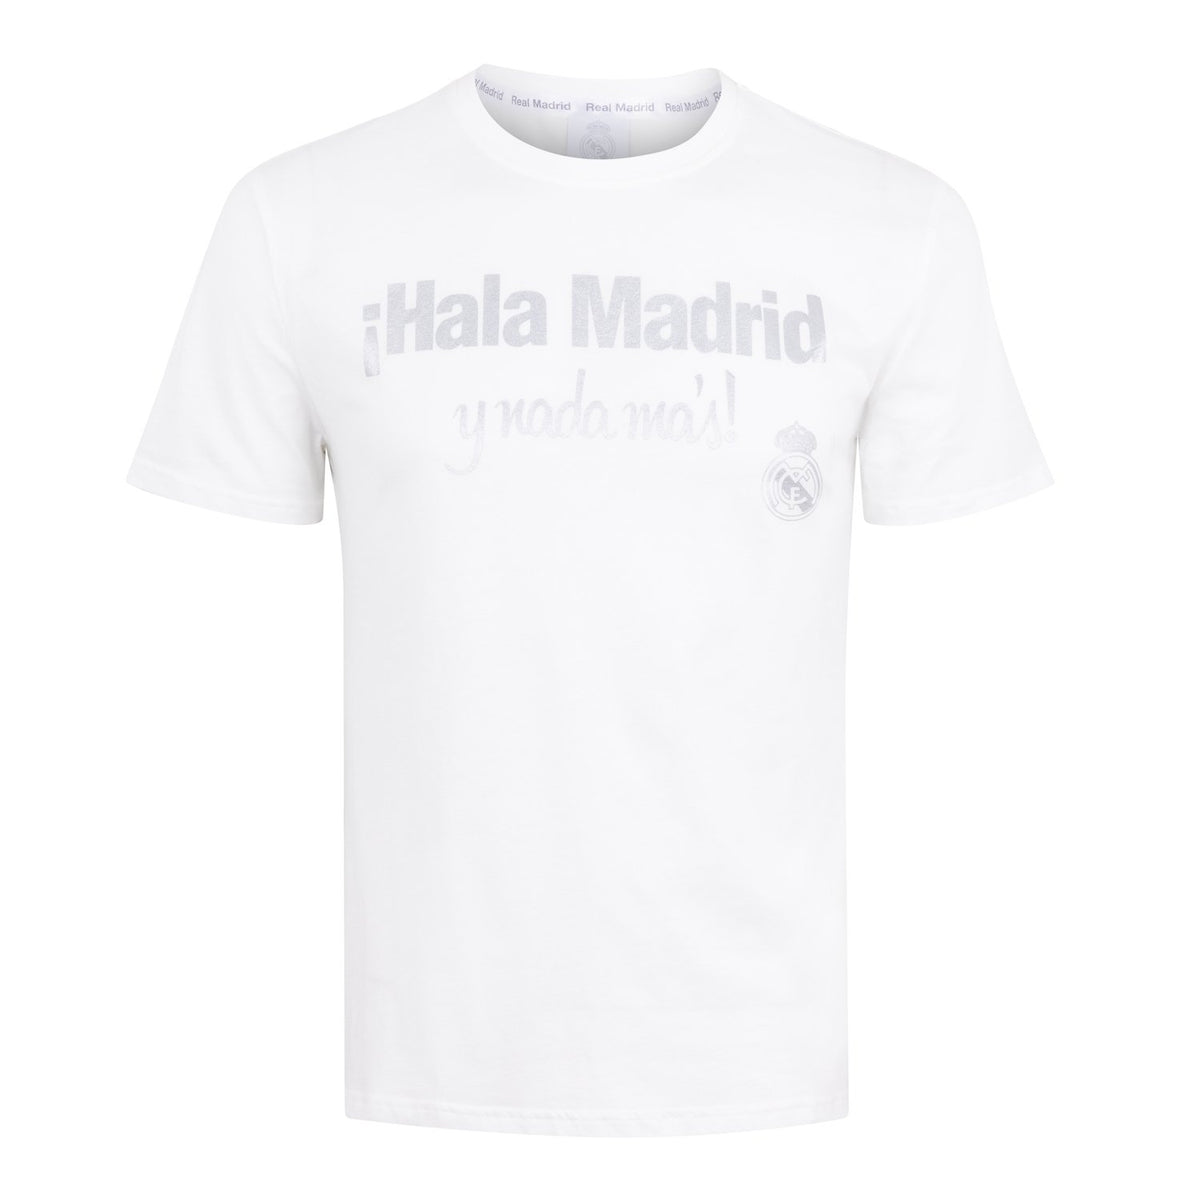 real madrid t shirt price